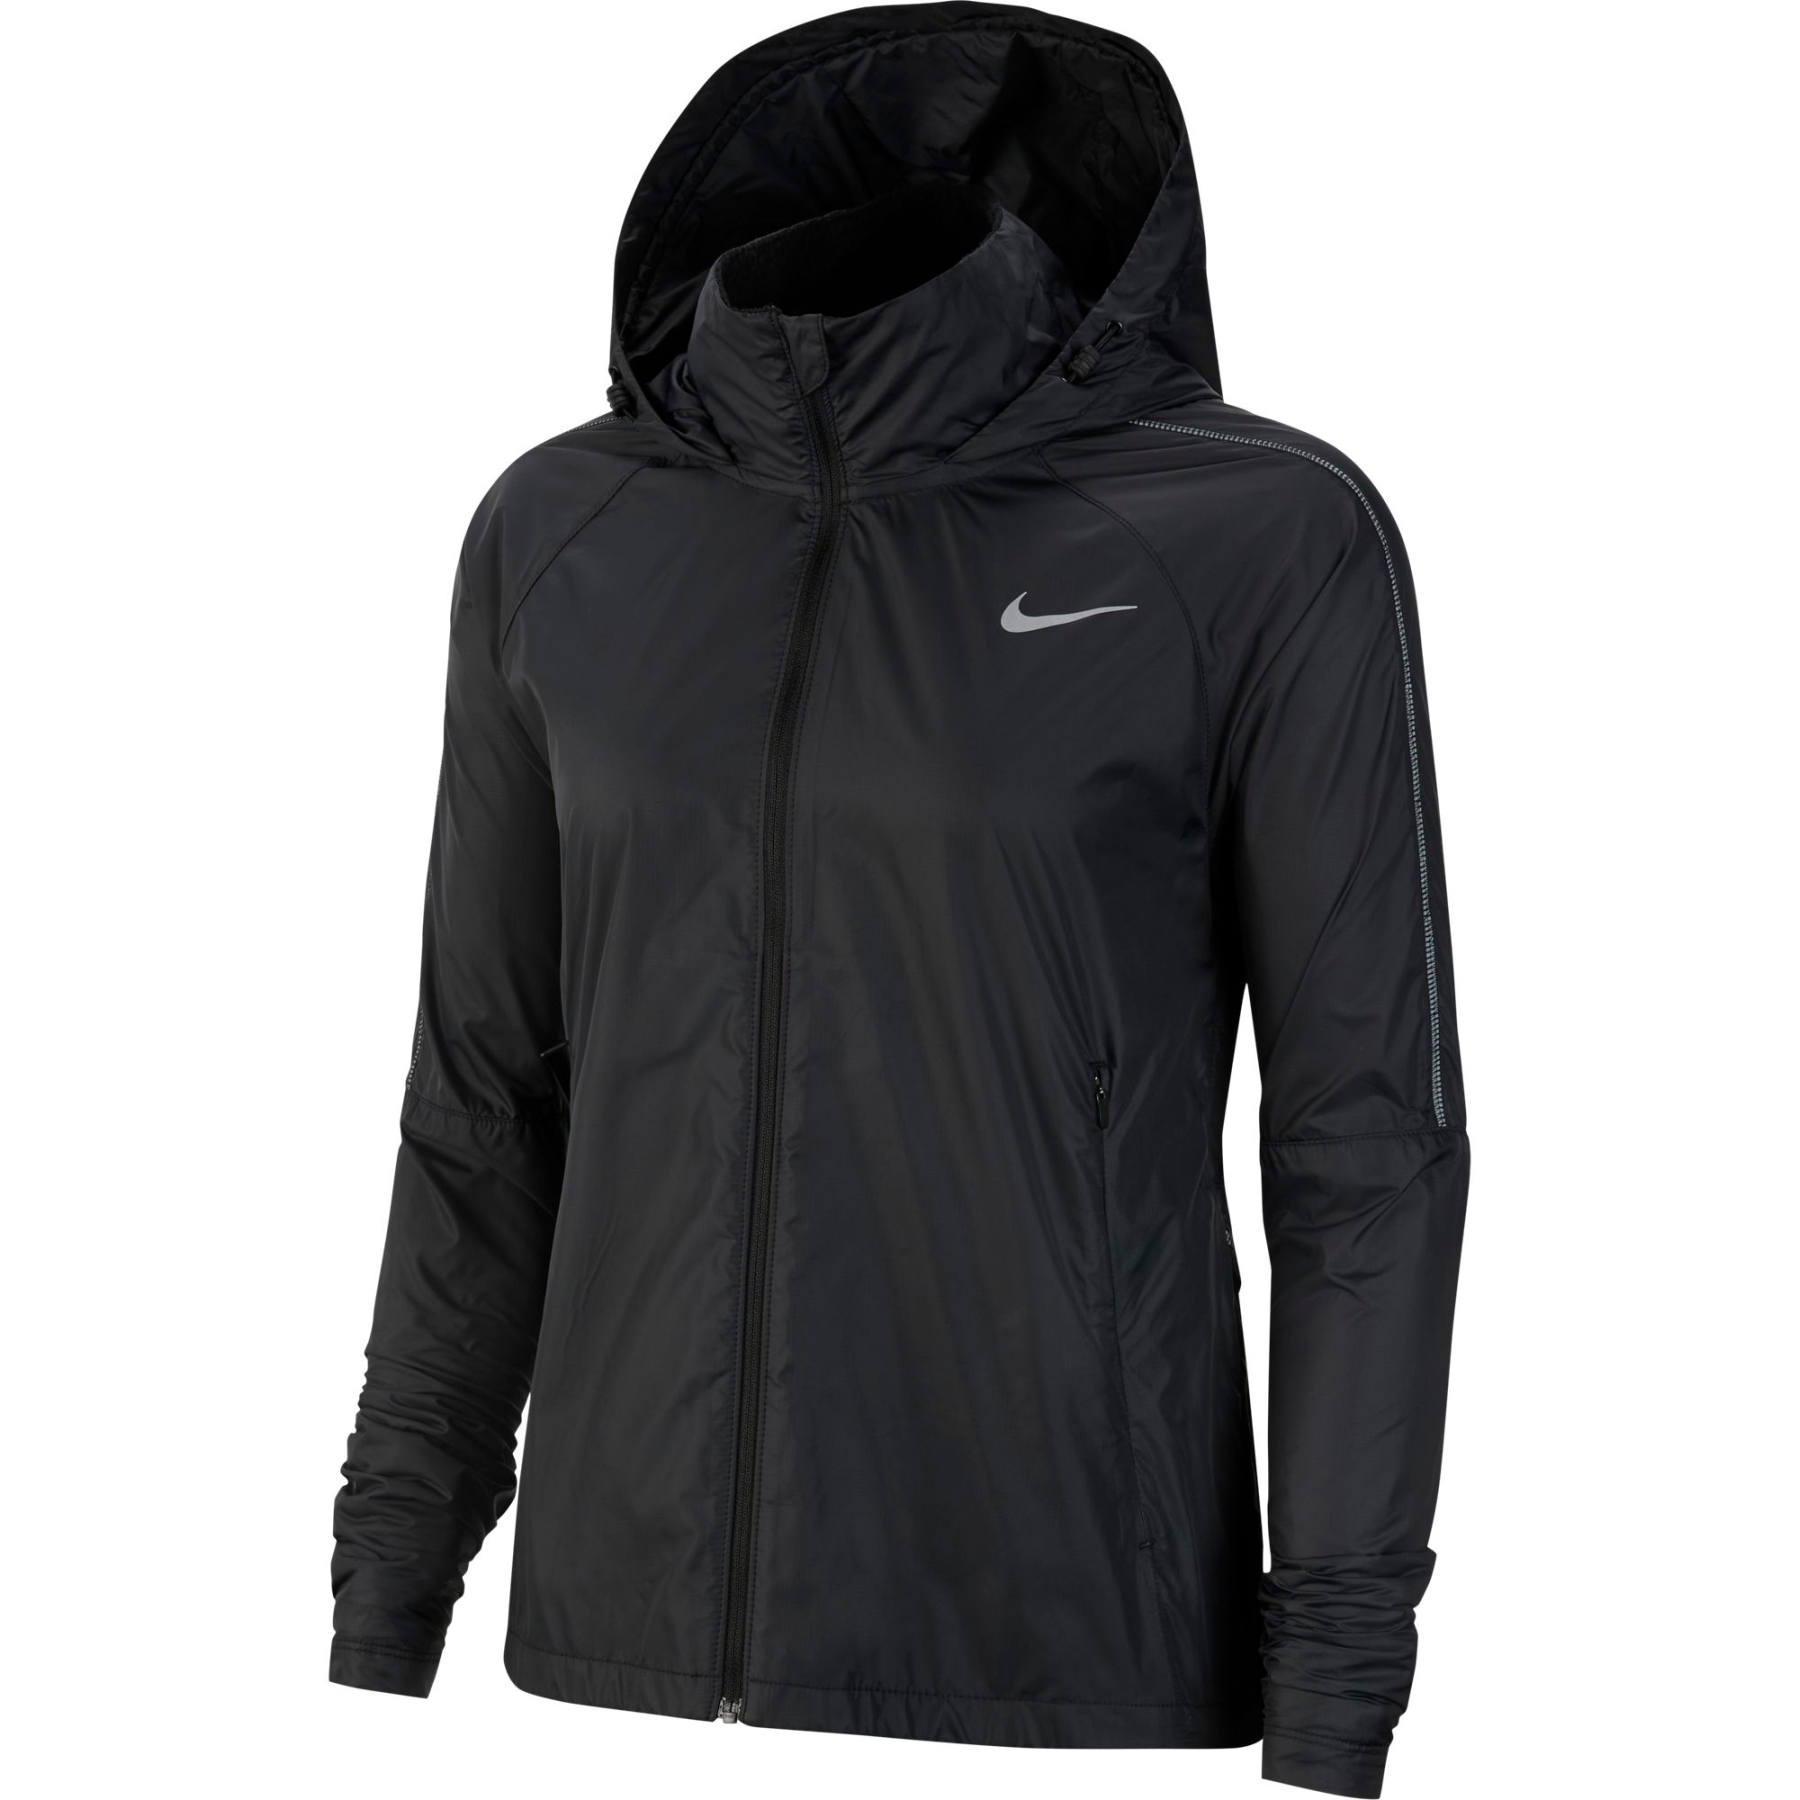 Immagine di Nike Giacca da corsa Donna - Shield - black/black/reflective silver CU3385-010